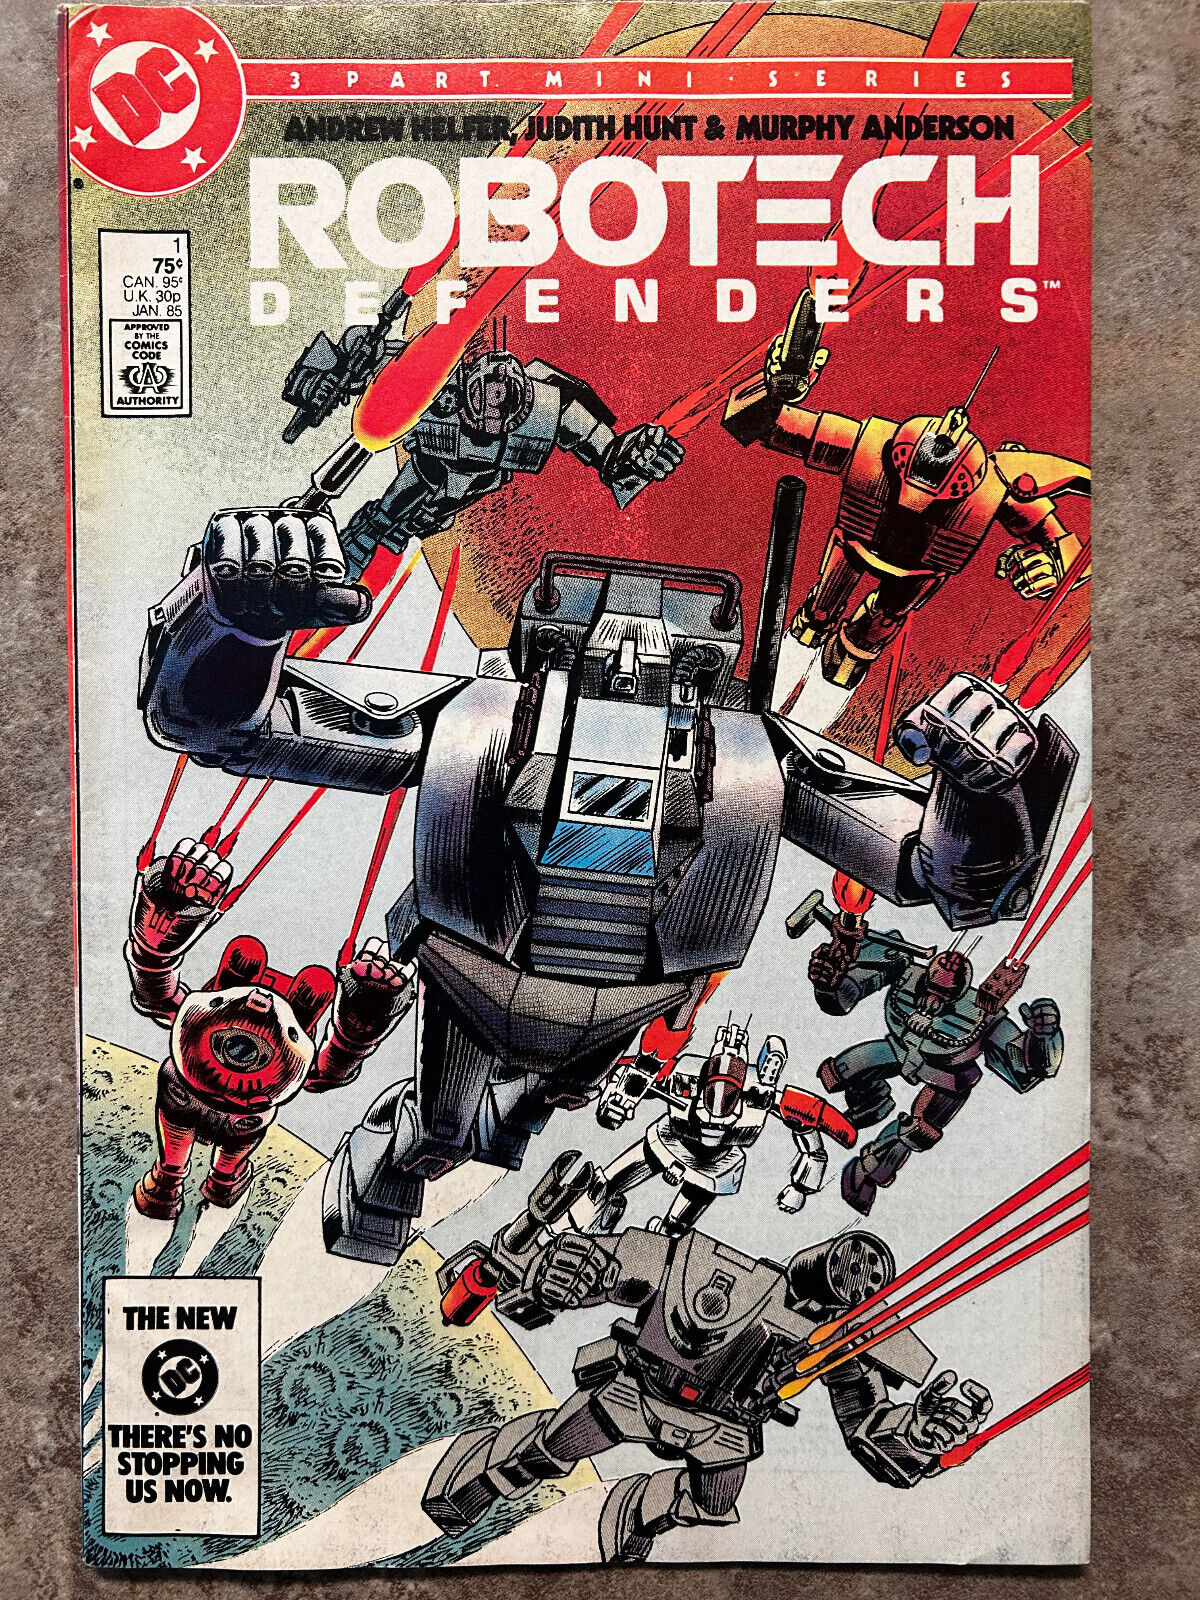 Robotech Defenders #1 VF+